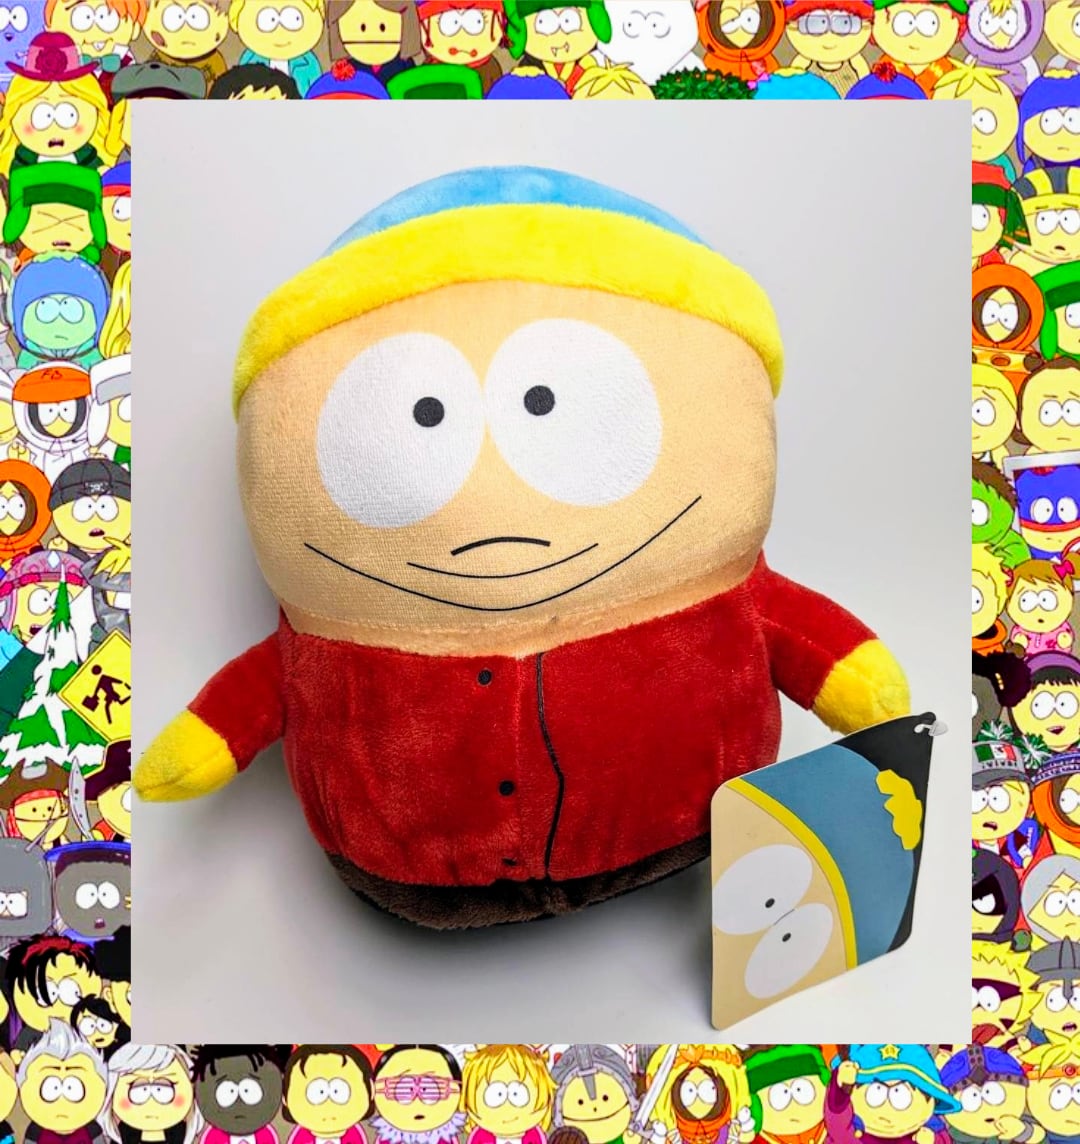 Toy Factory【ぬいぐるみ エリック・カートマン 『サウスパーク』（South Park）】〚アメリカン雑貨 アメトイ〛